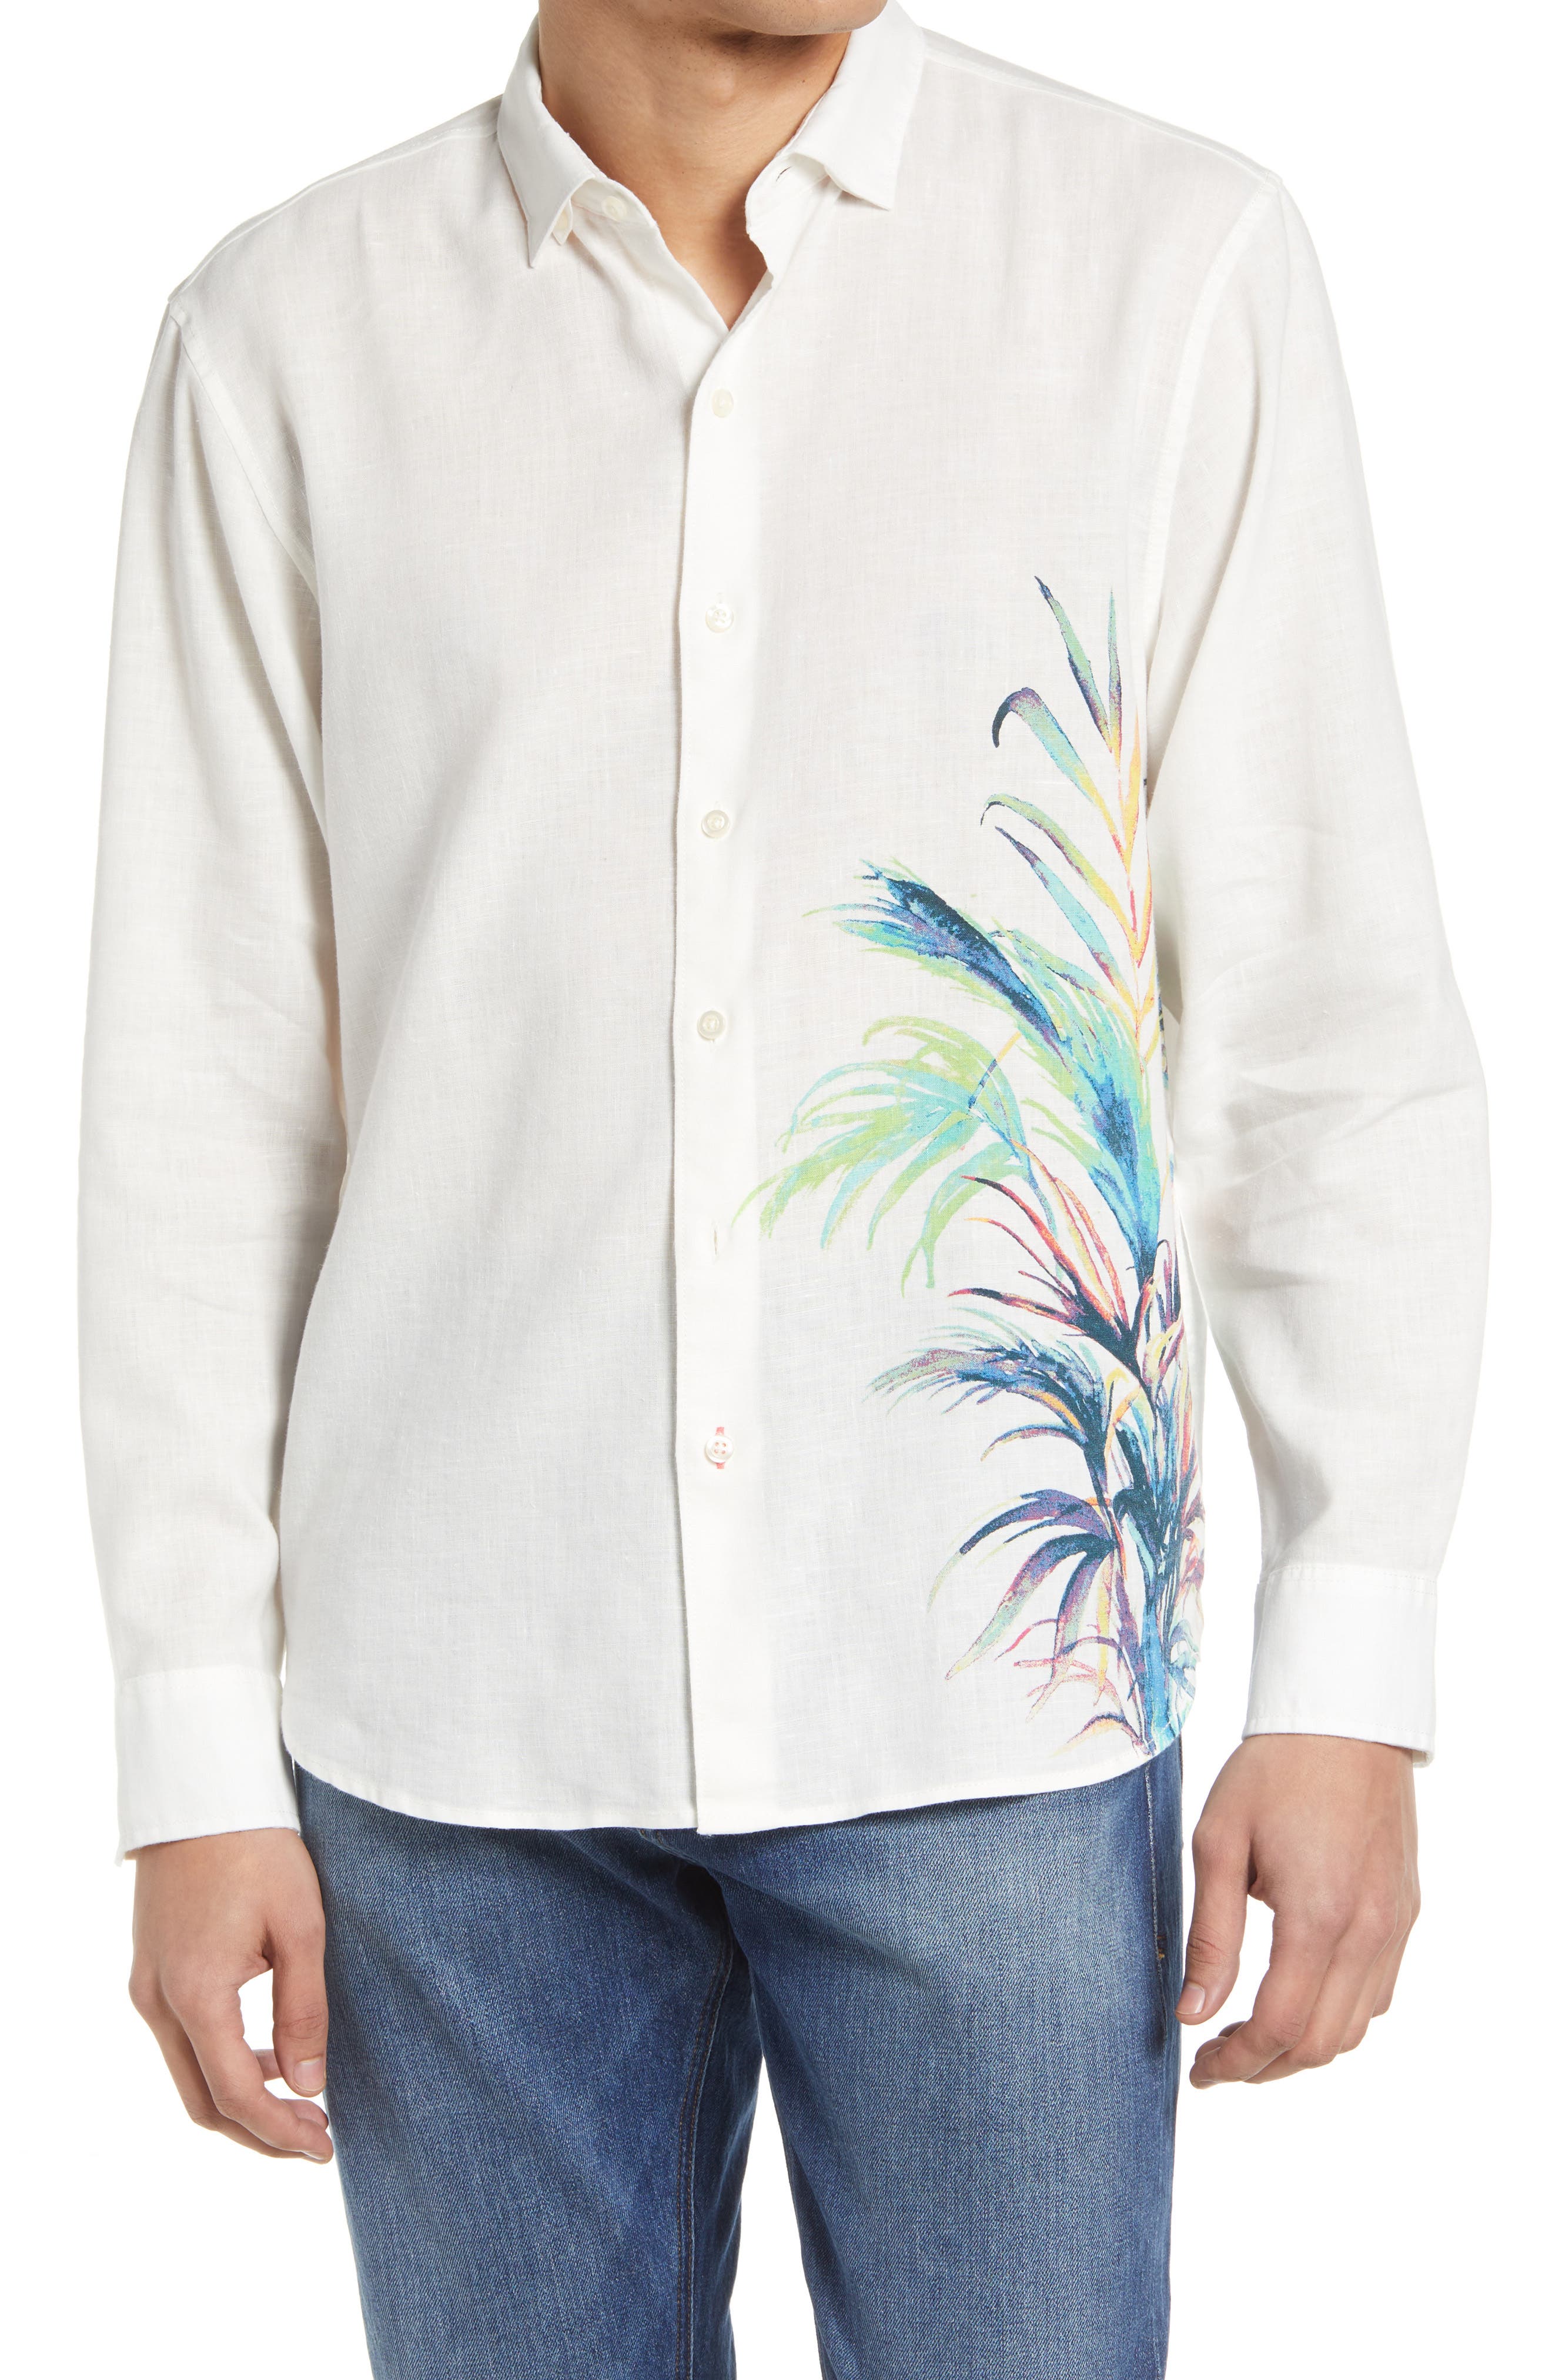 Tommy Bahama Nwt $125 Help Me Fronda Ocean Deep Knit Linen Shirt S M L XL 2XL 